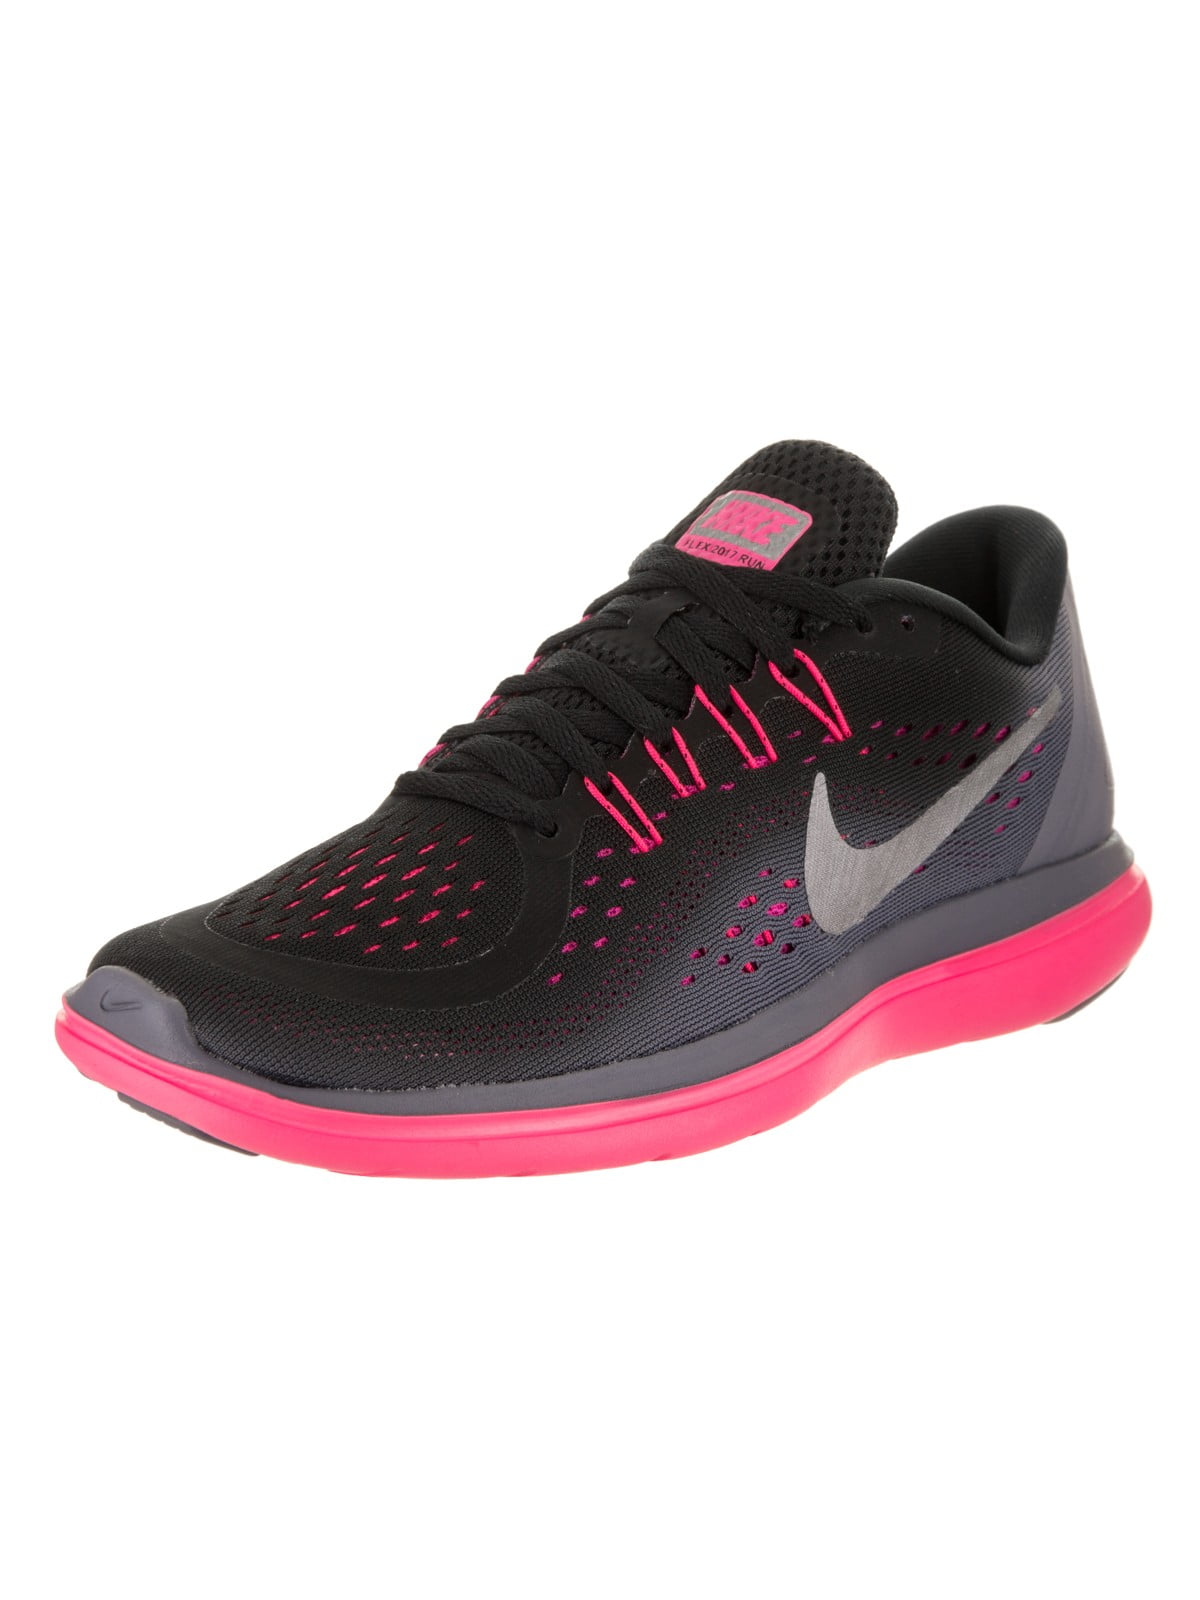 Nike Women's Flex 2017 Running Shoe - Walmart.com